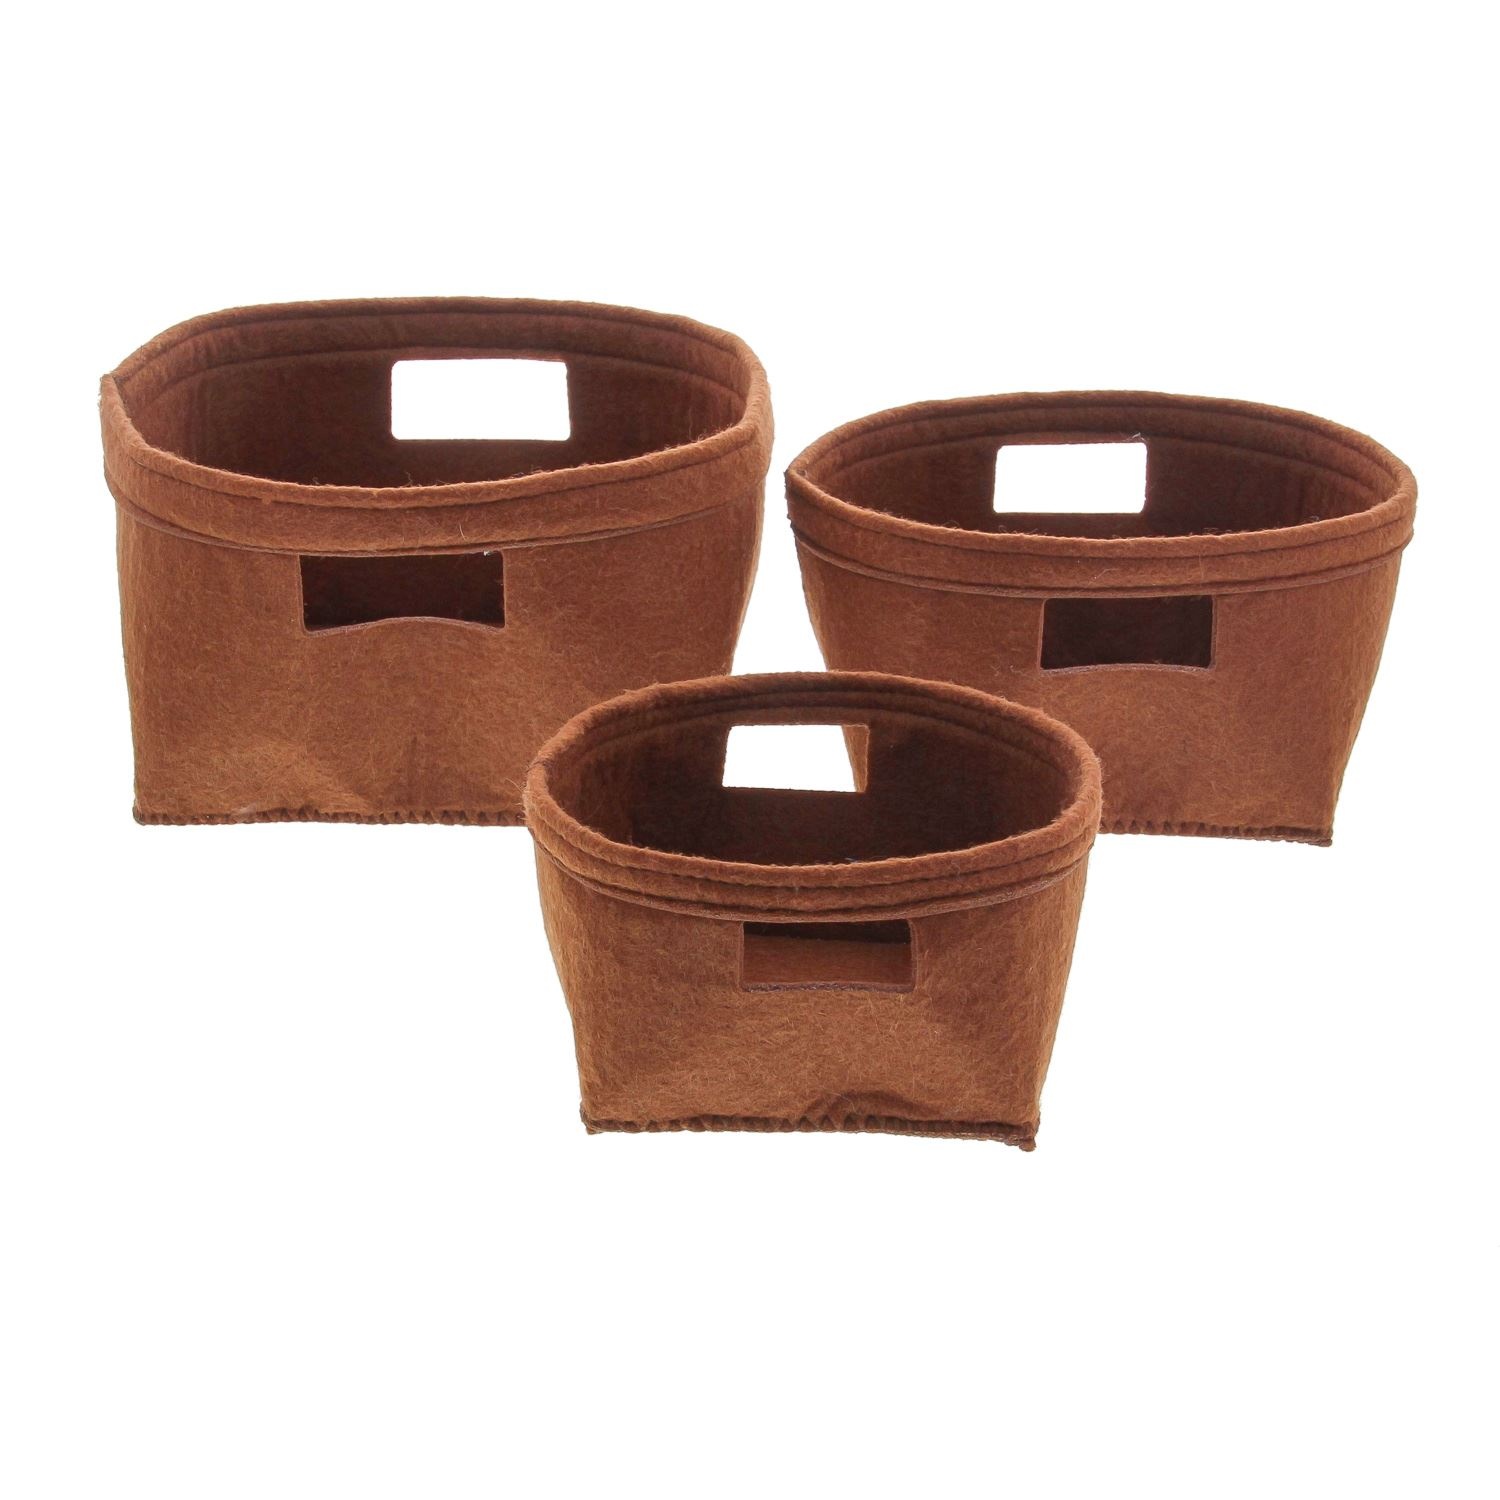 Felt baskets brown - 220*120*220mm - 4 x set of 3 pieces